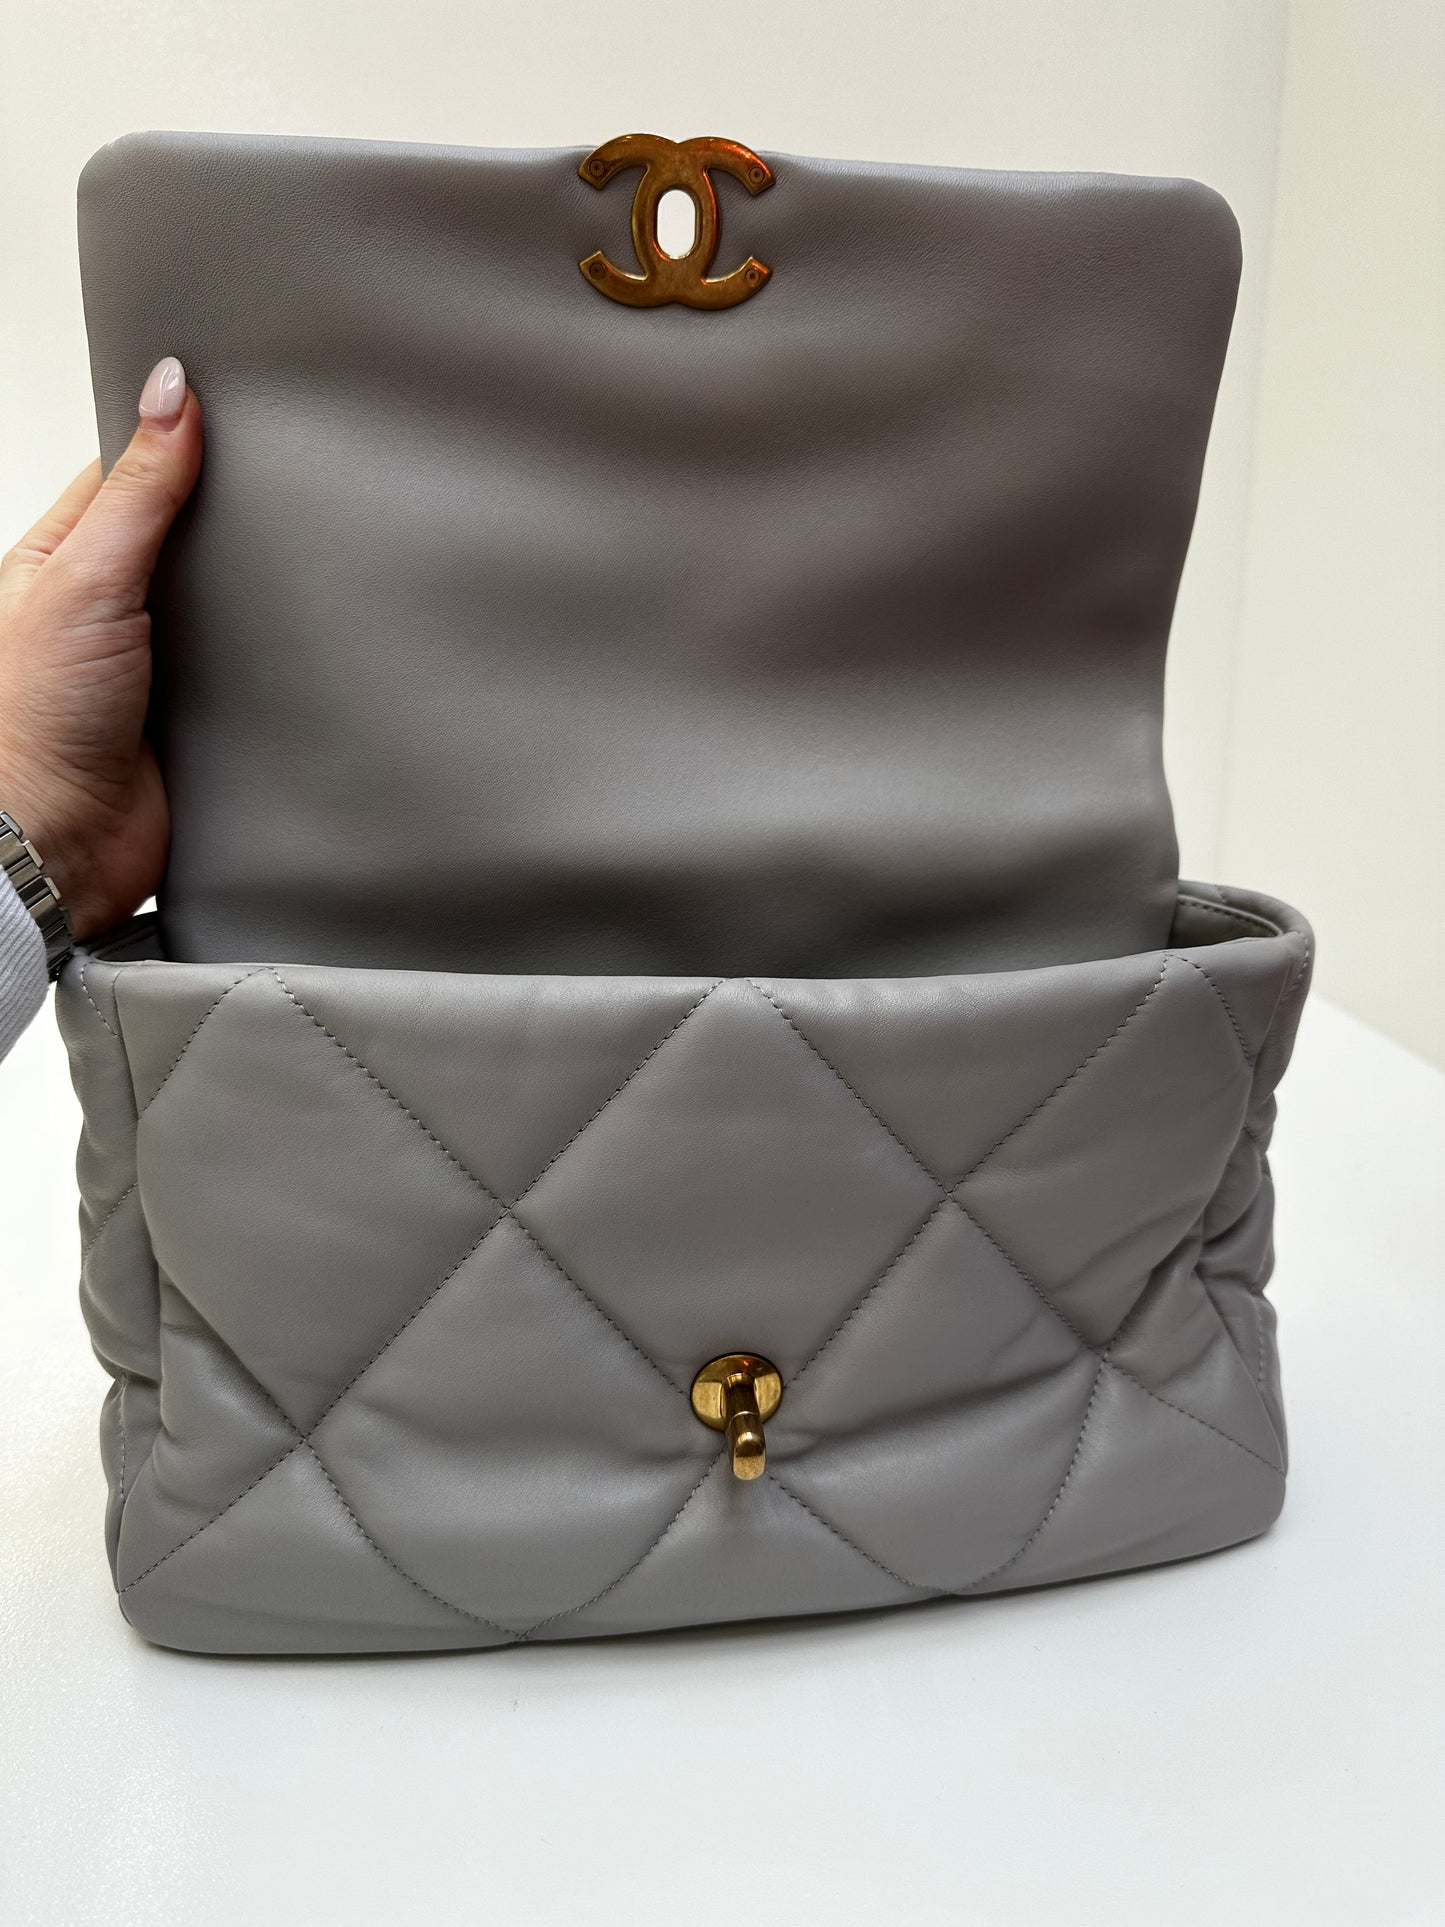 Chanel Large Grey 2019 Bag